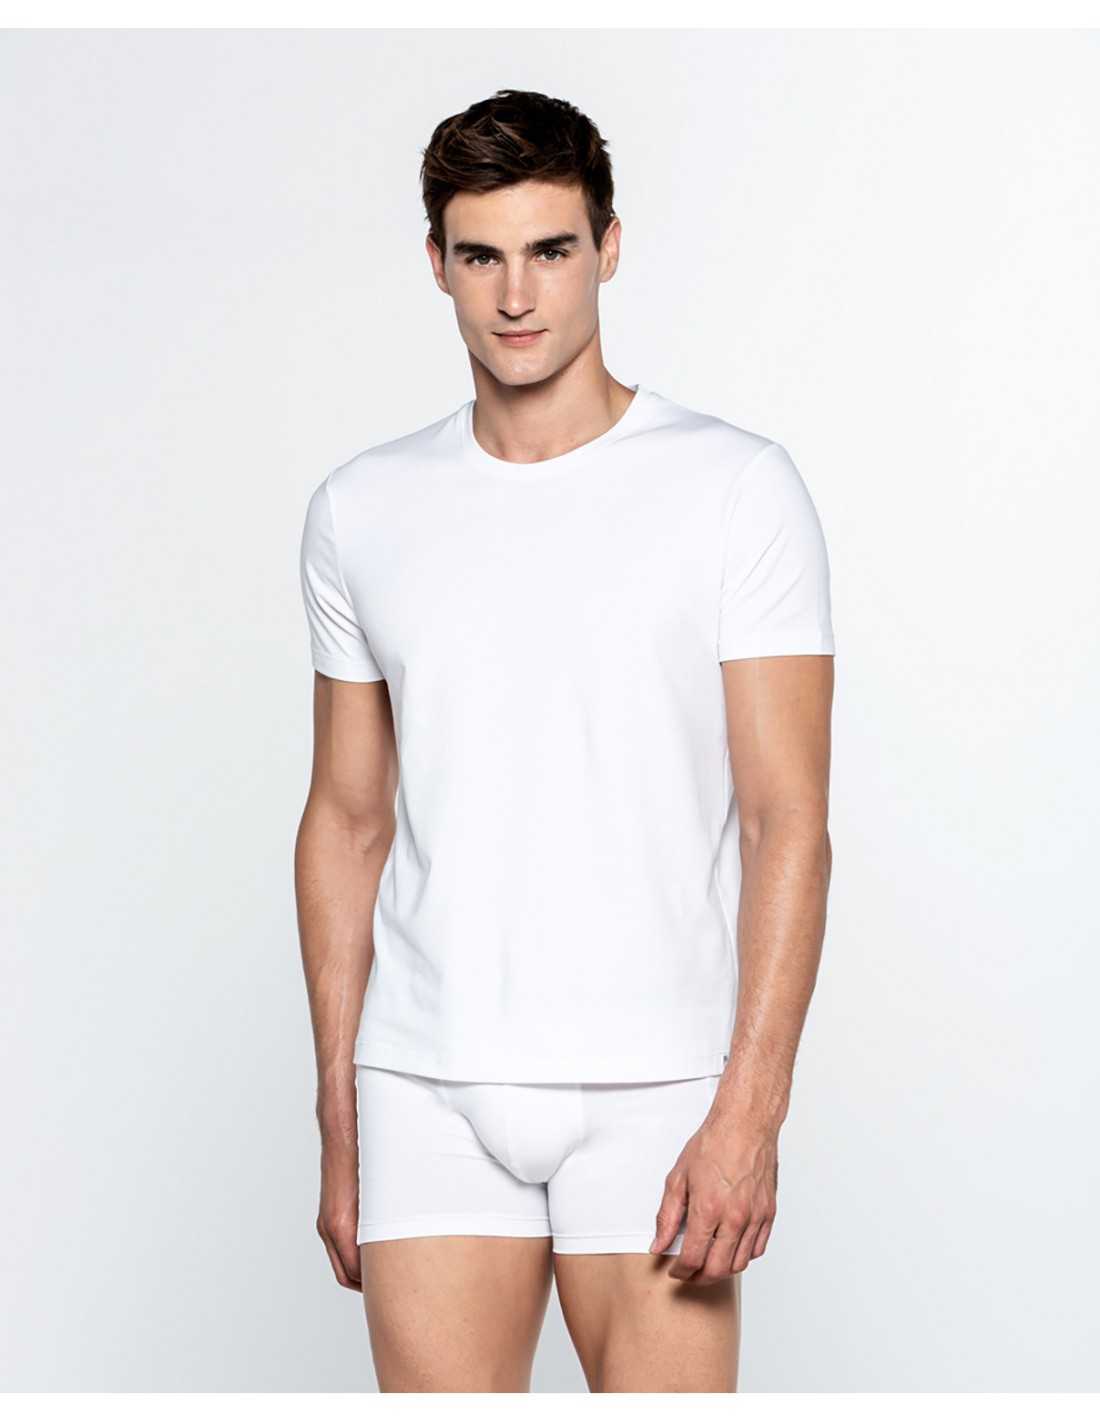 Camiseta Punto Blanco cuello redondo Ecologix TALLAS: s, m, l, xl; COLOR: blanco, negro Composición: algodón - HOMBRE 